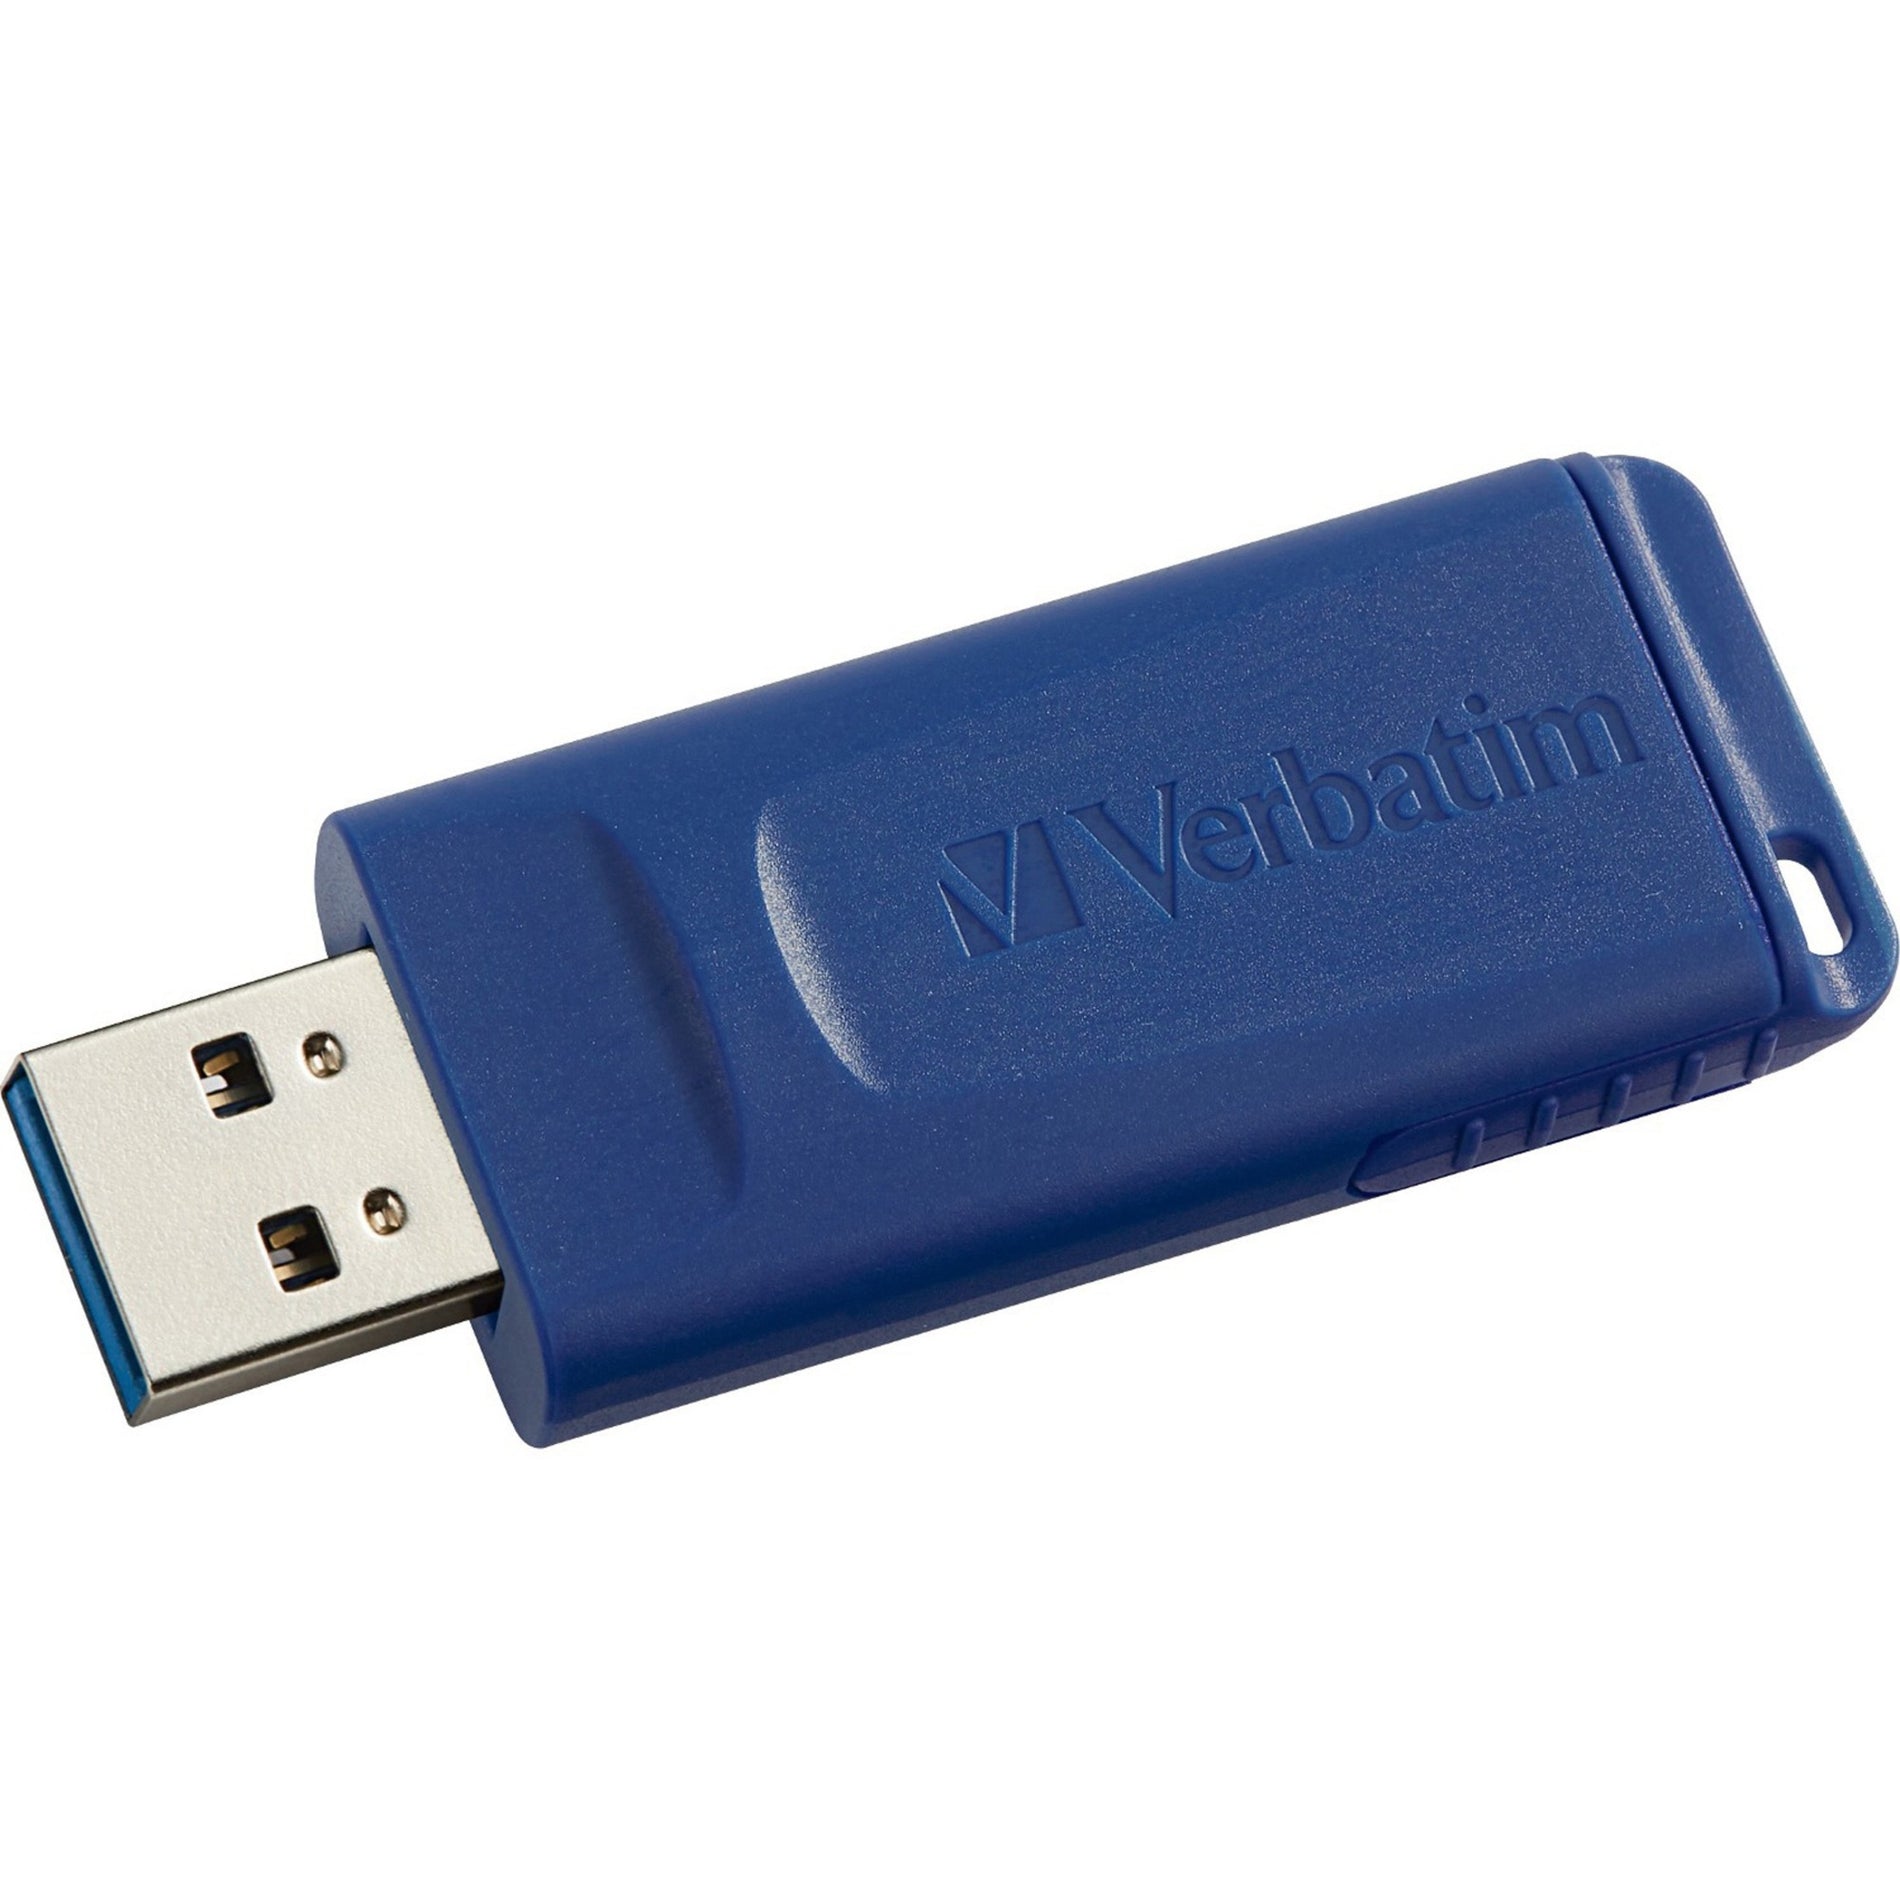 Microban 98659 128GB USB Flash Drive - Blue, Antimicrobial, Retractable, Capless